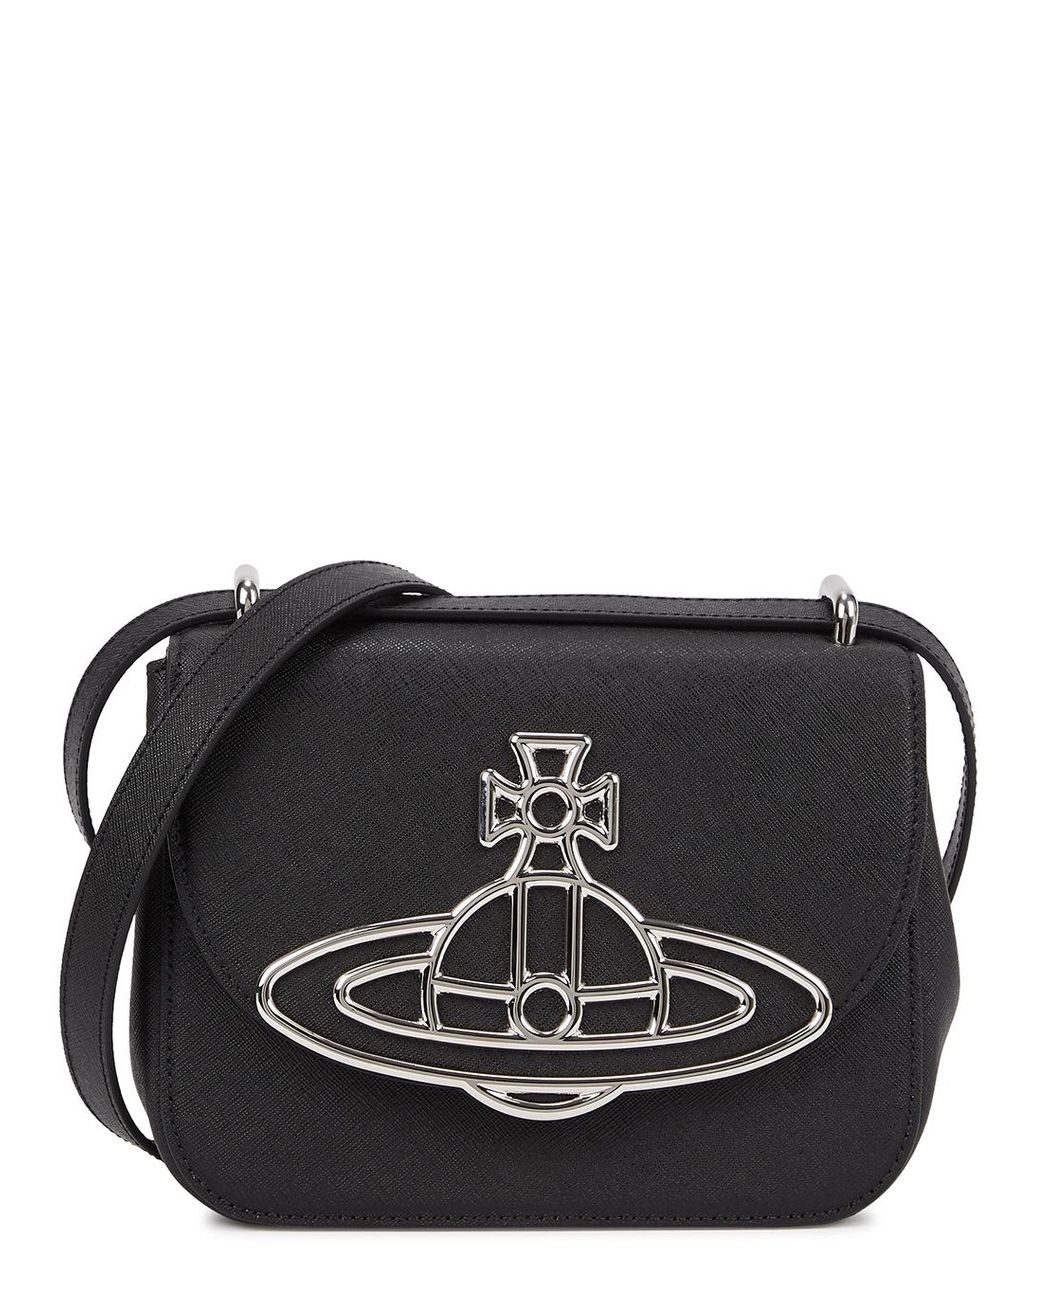 Vivienne Westwood Linda Black Saffiano Leather Cross-body Bag | Lyst